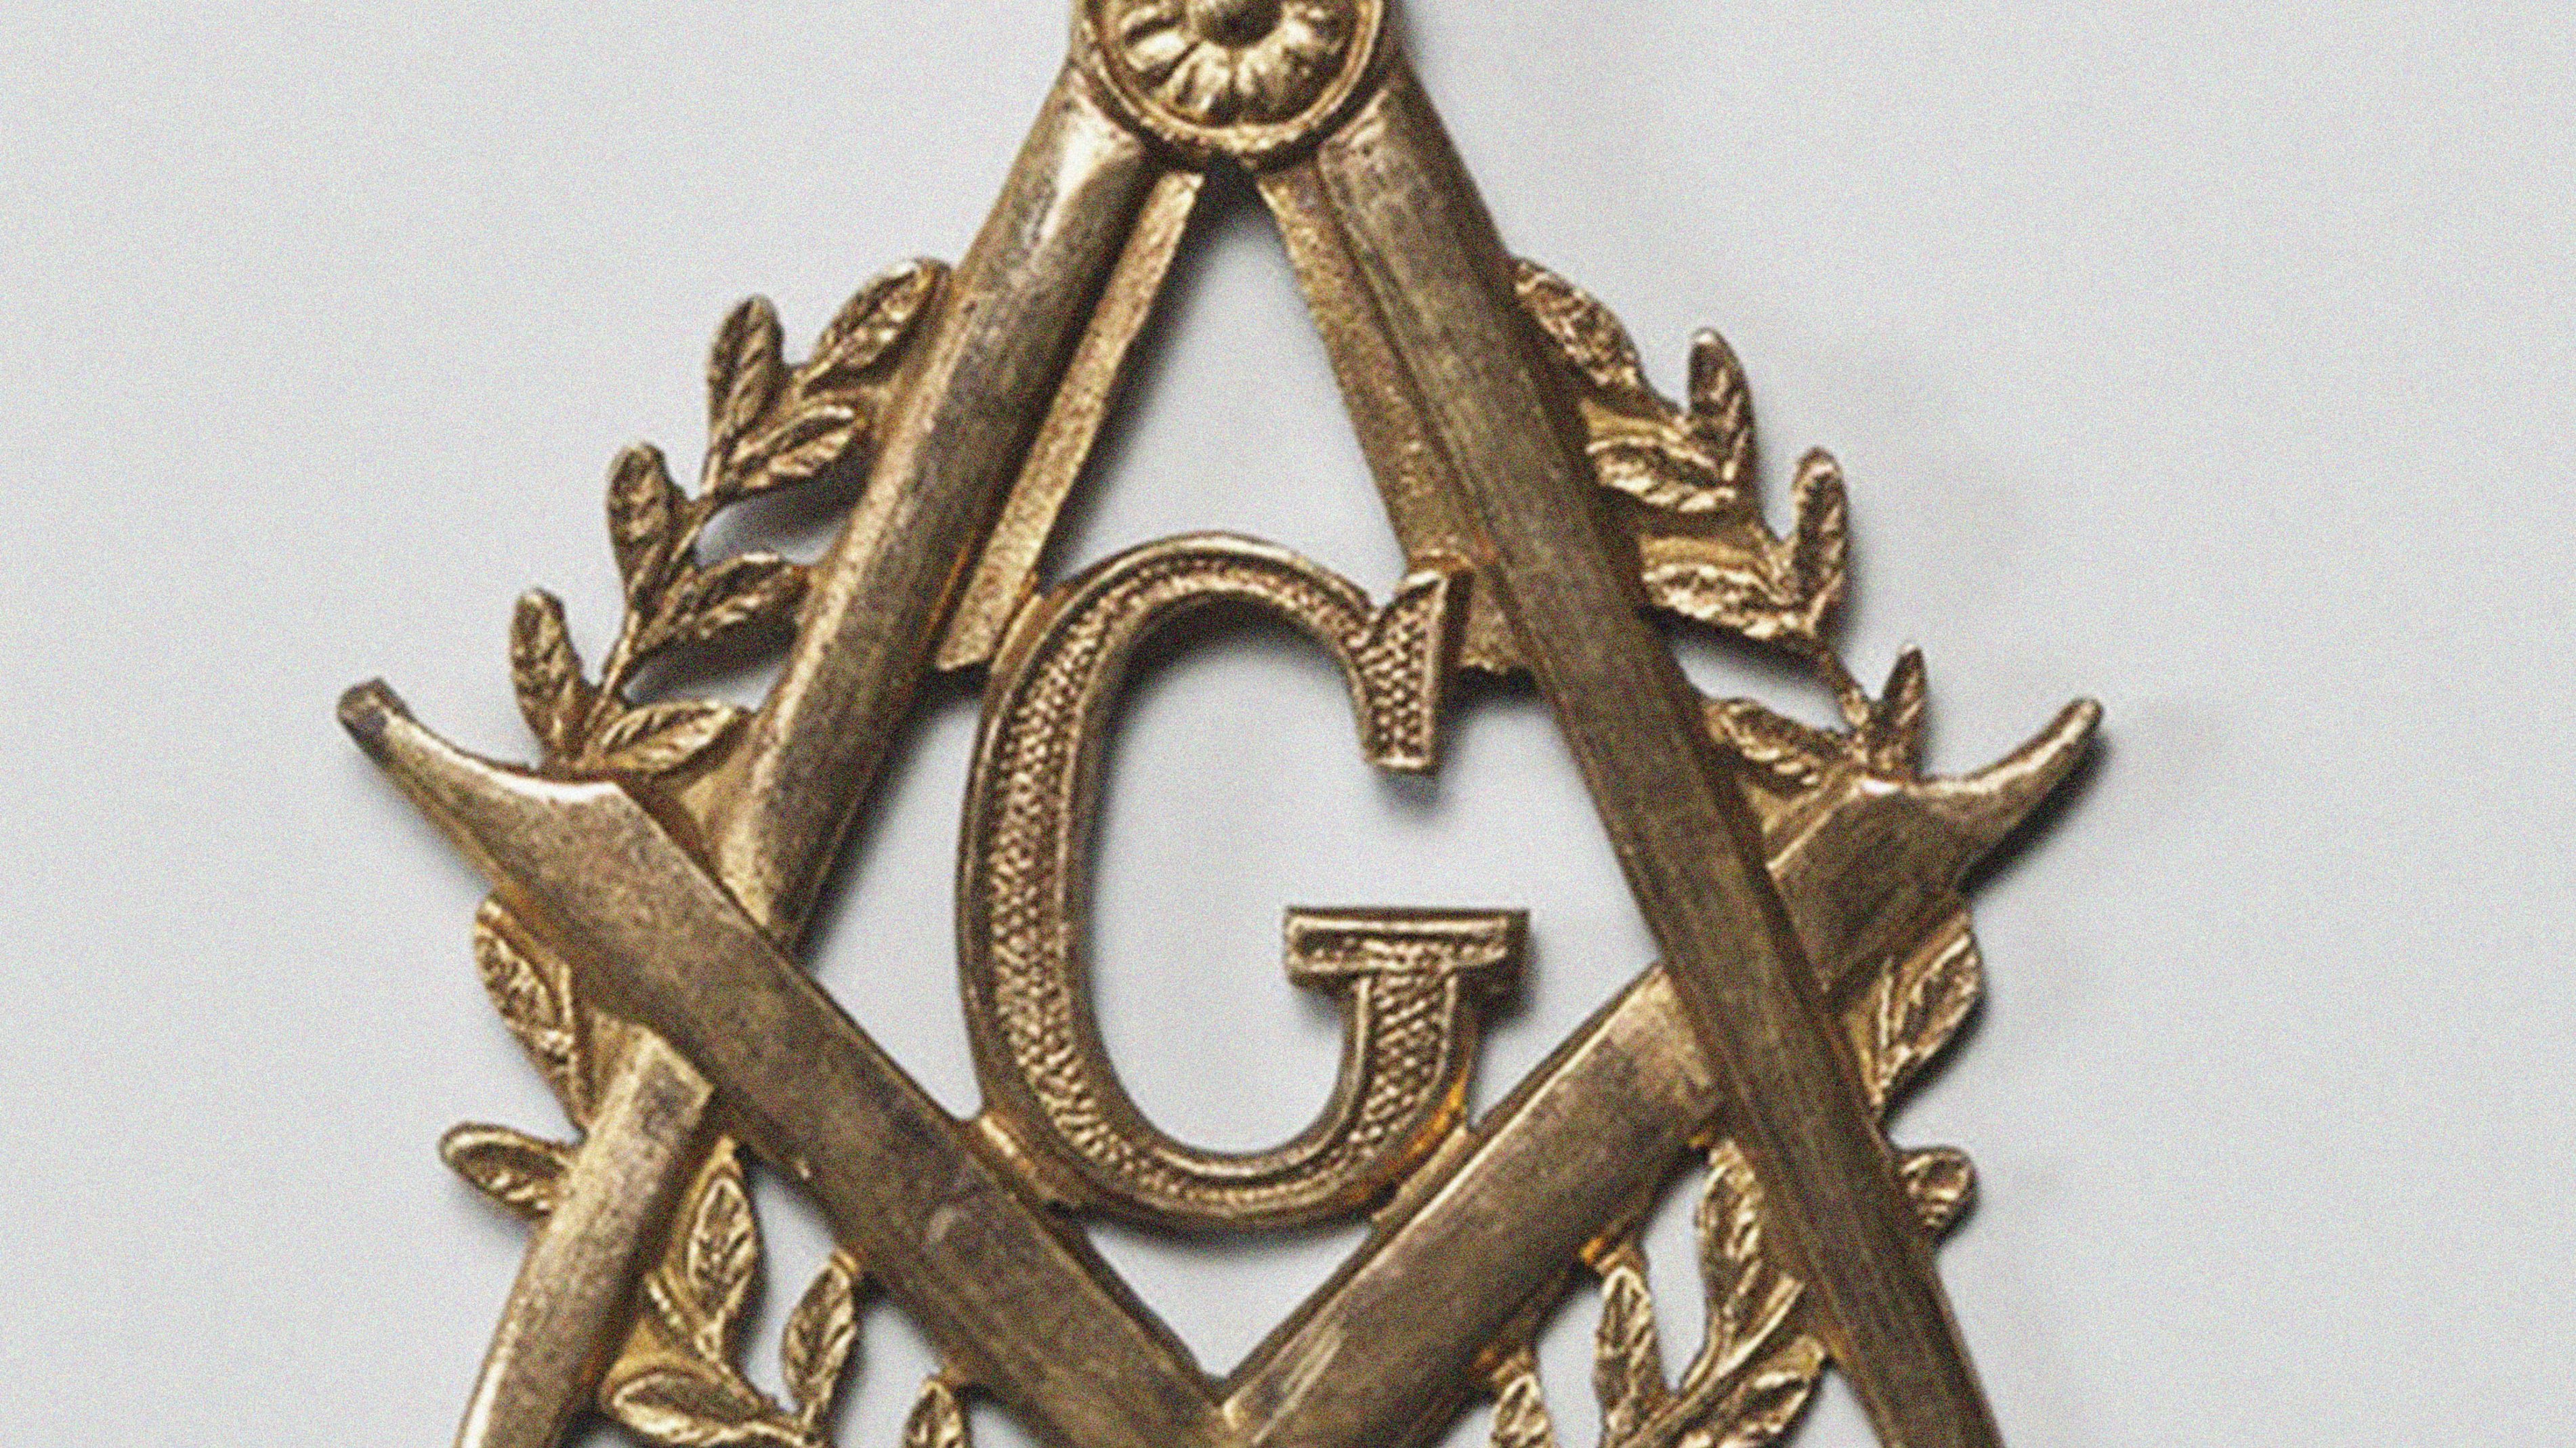 Emblem Of The Masonic Lodge Flaming Star